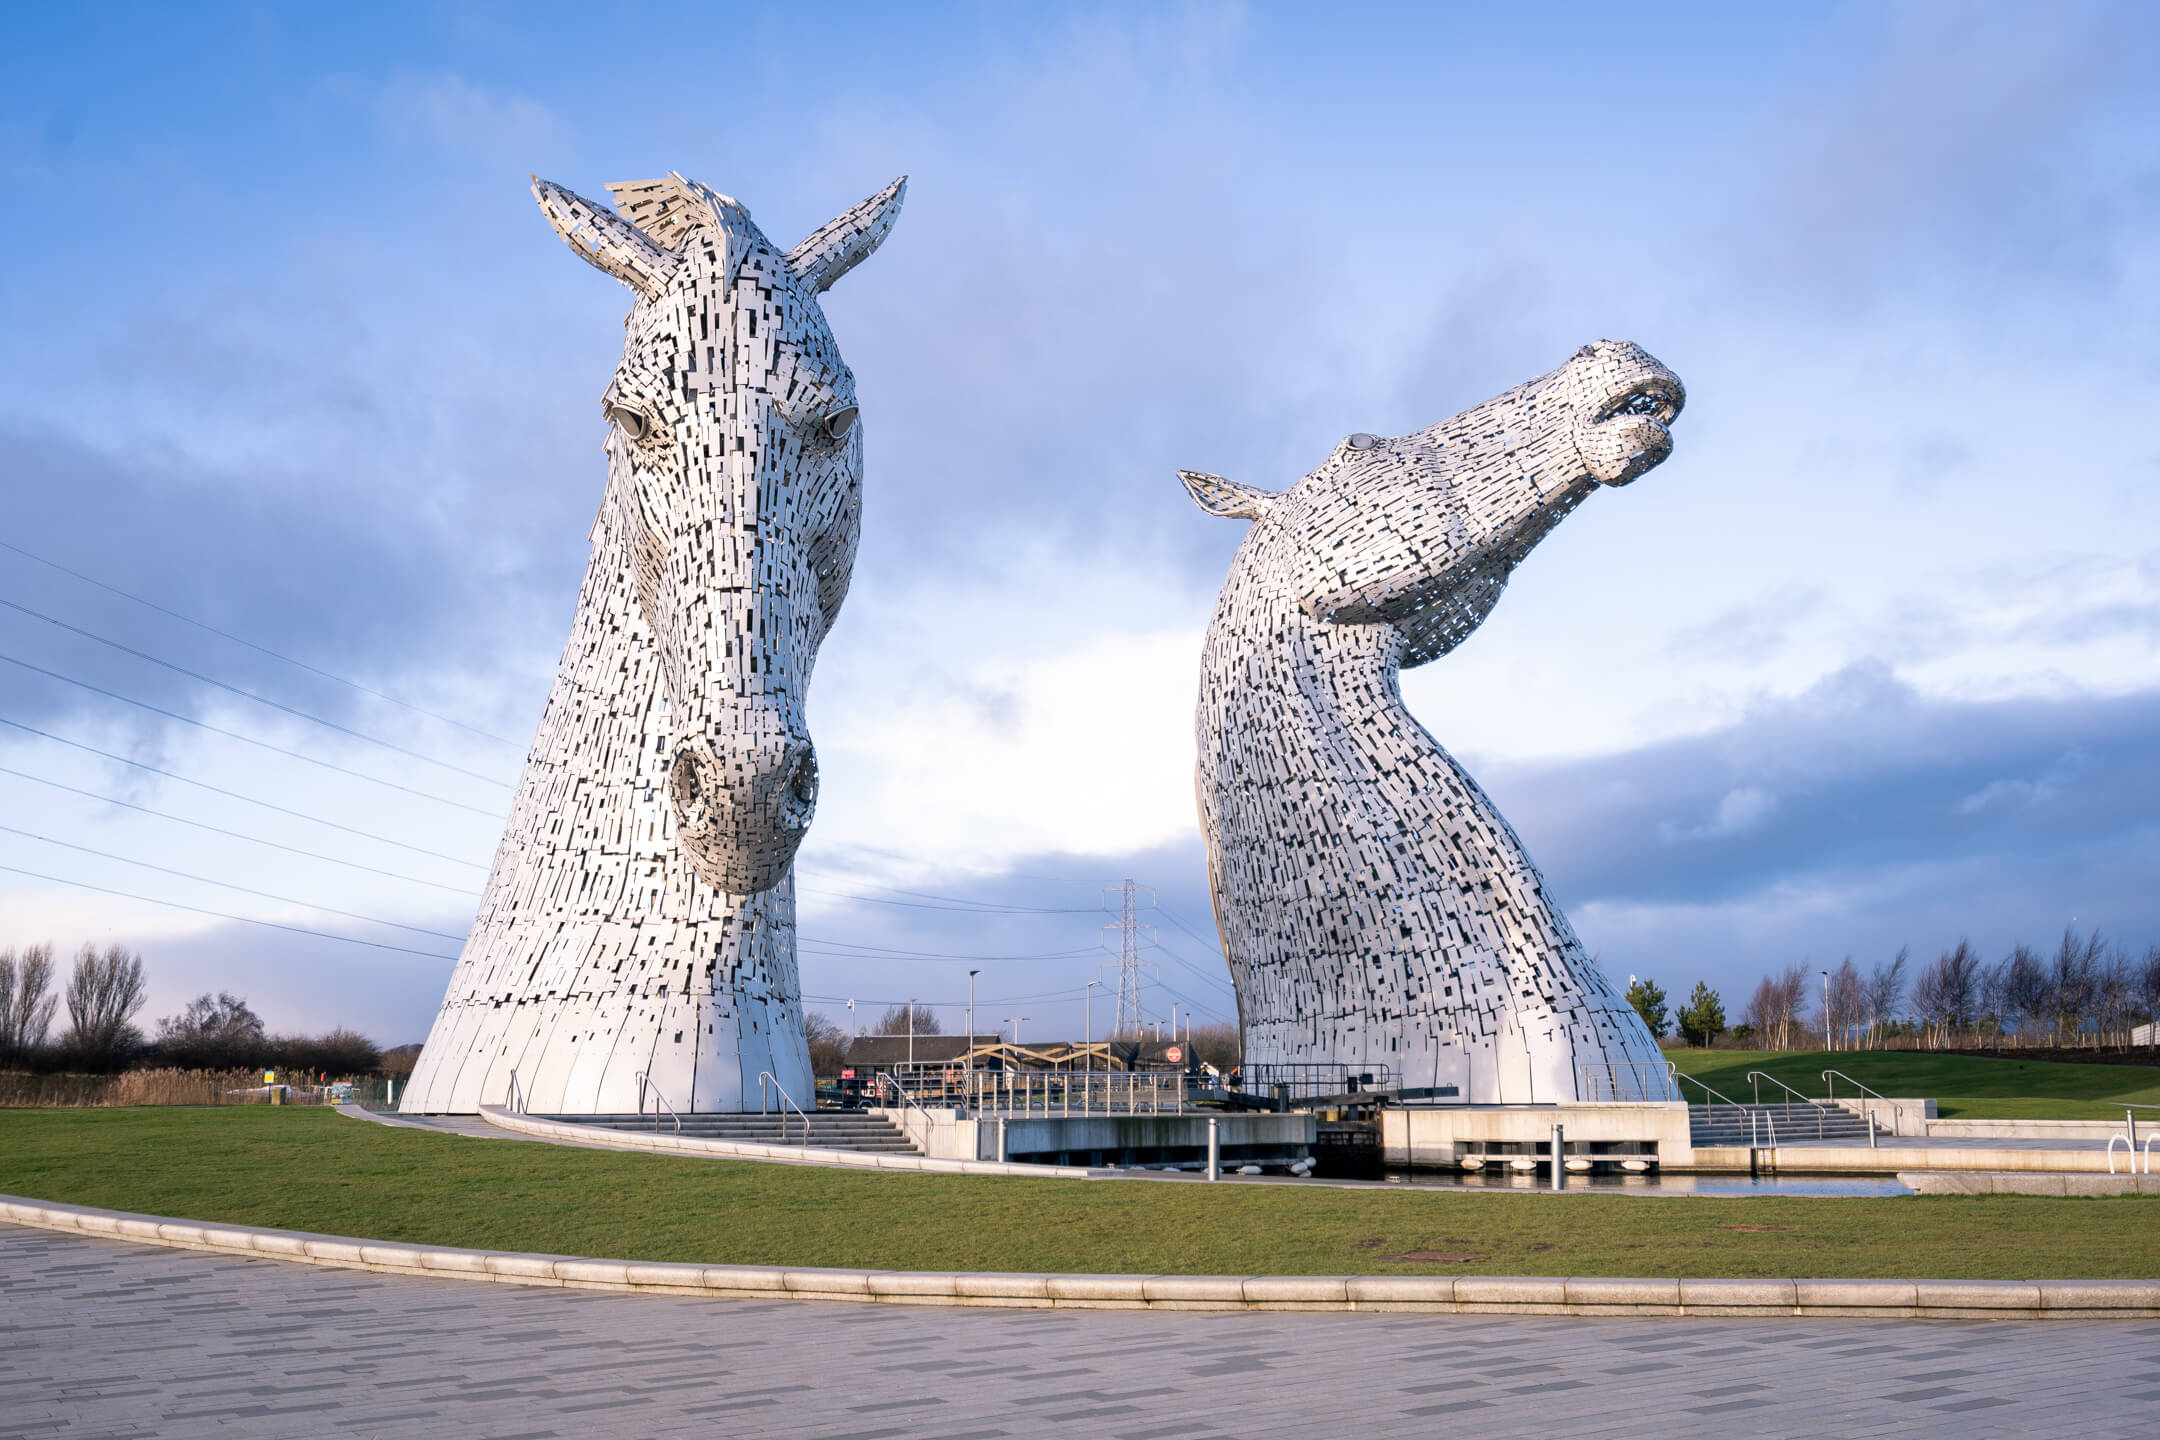 The Kelpies, Scotland - Sculpture by Andy Scott